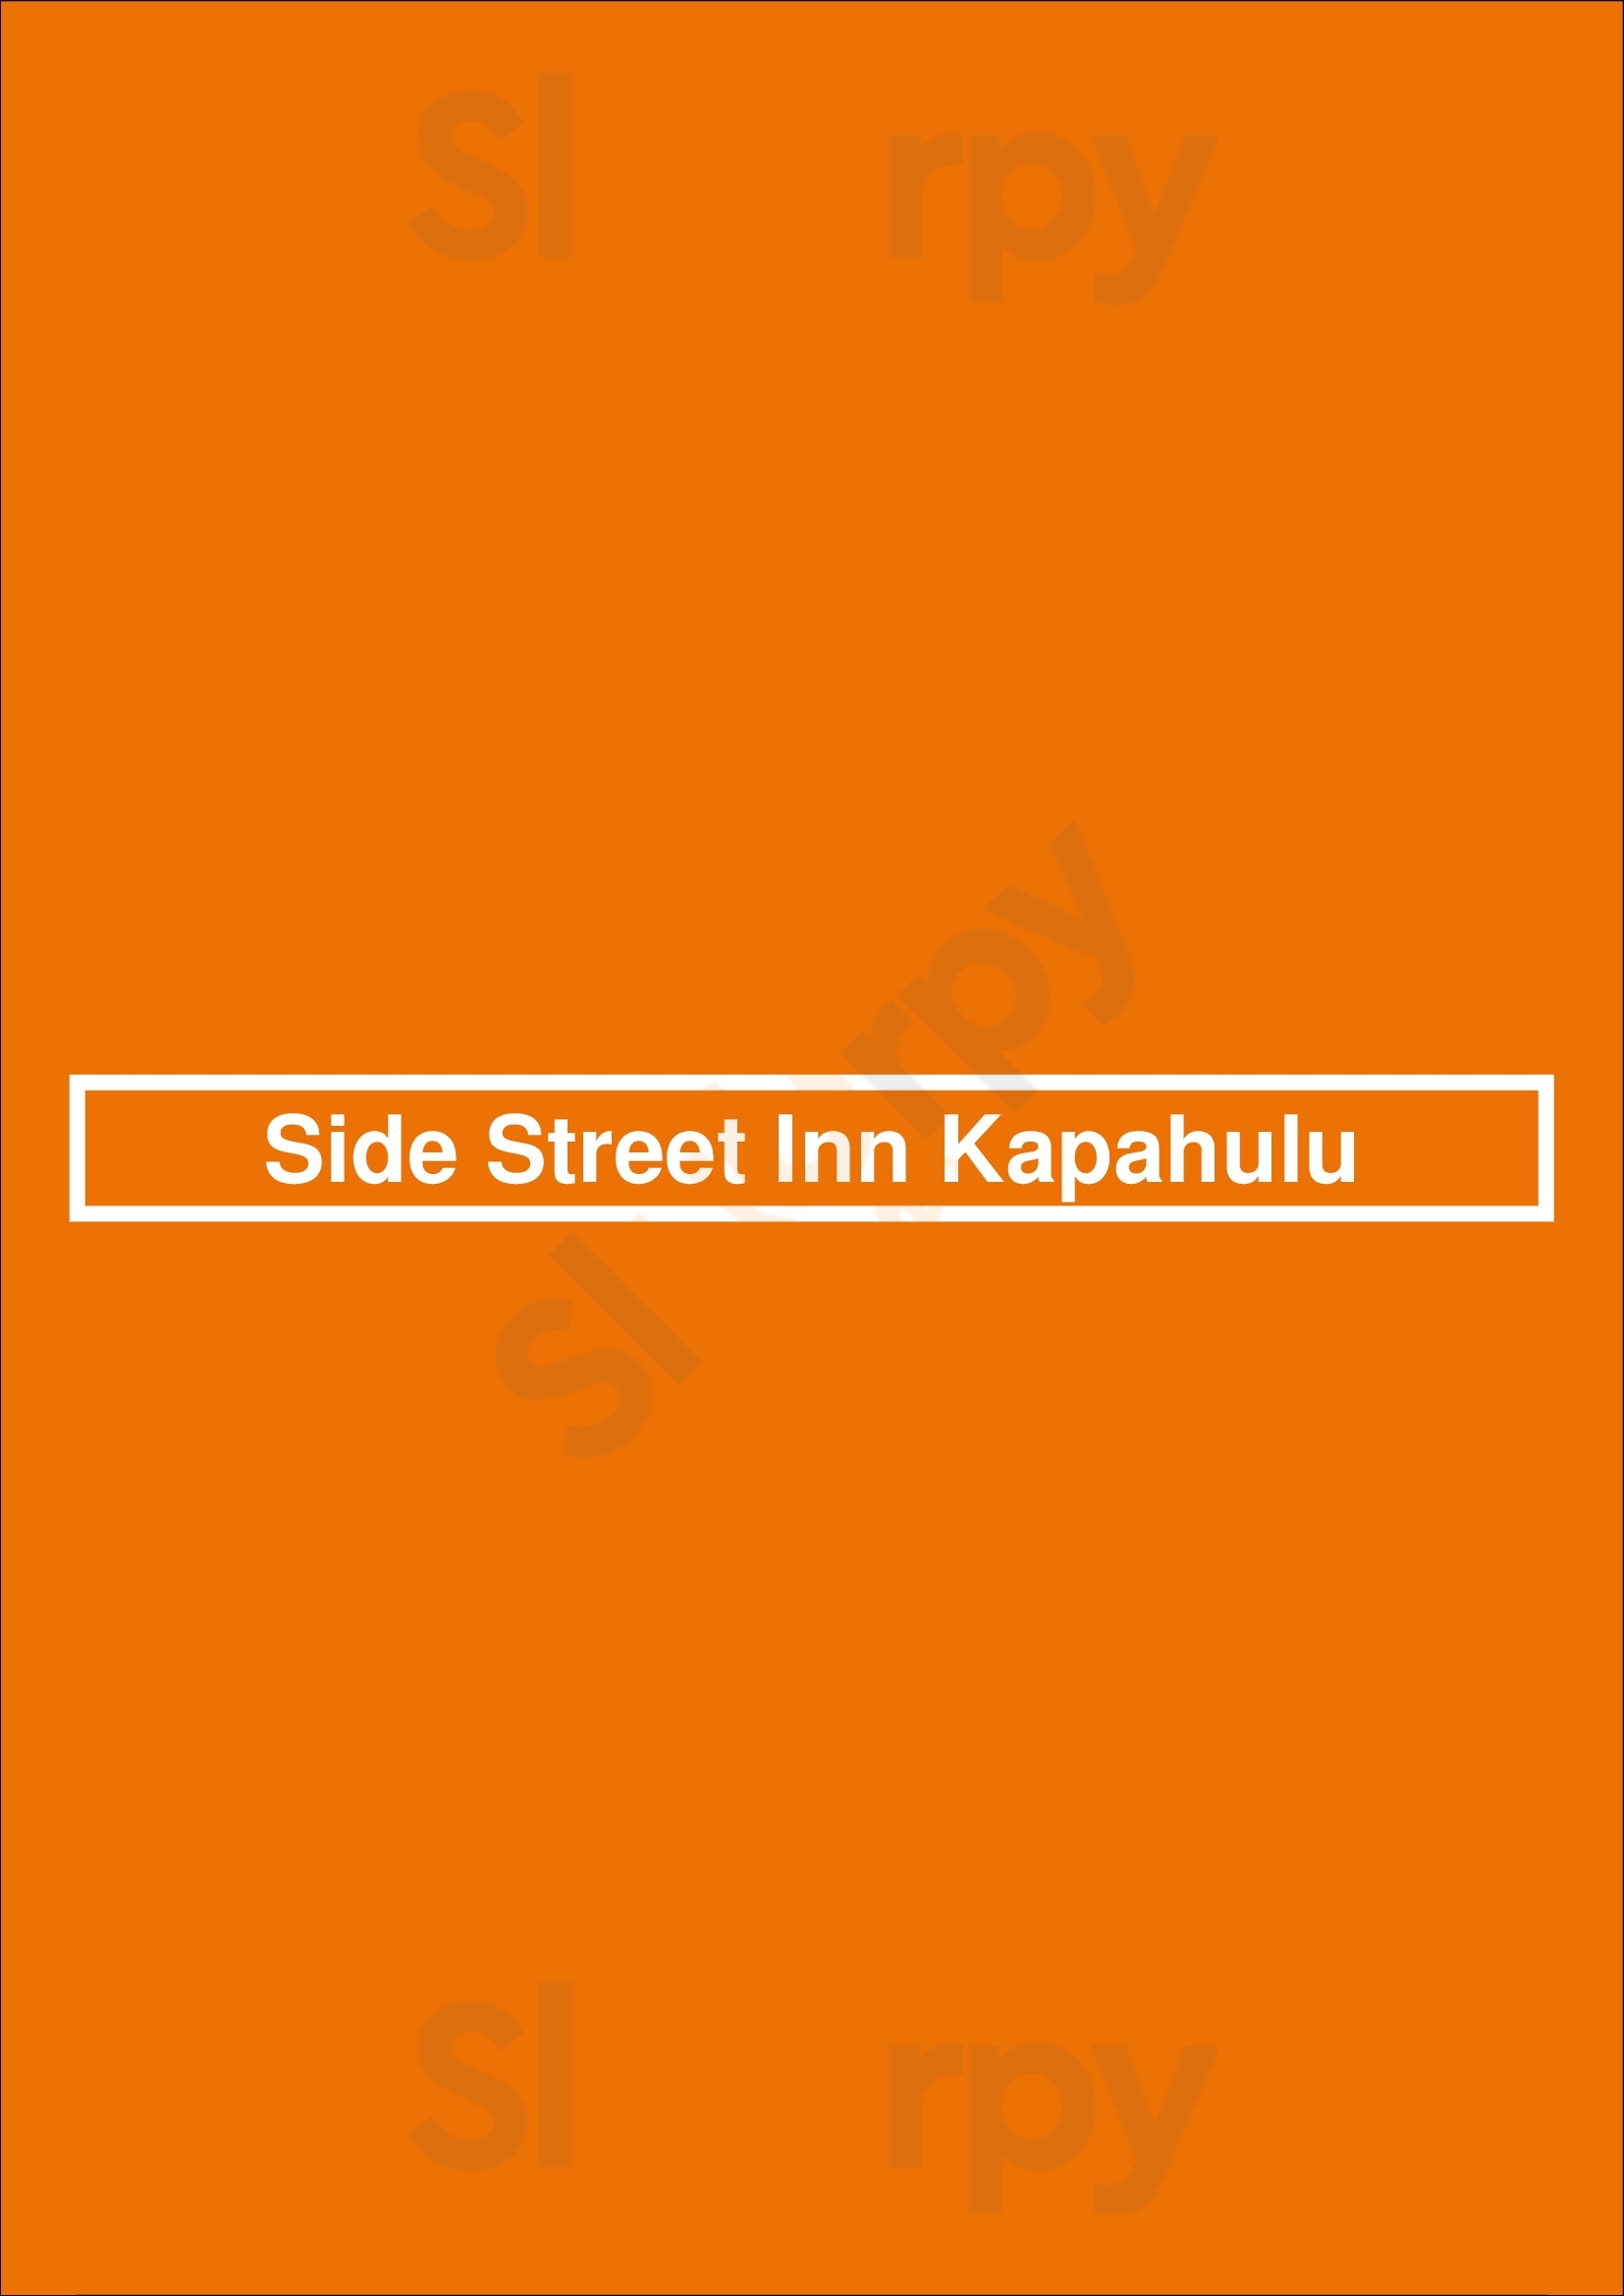 Side Street Inn Kapahulu Honolulu Menu - 1